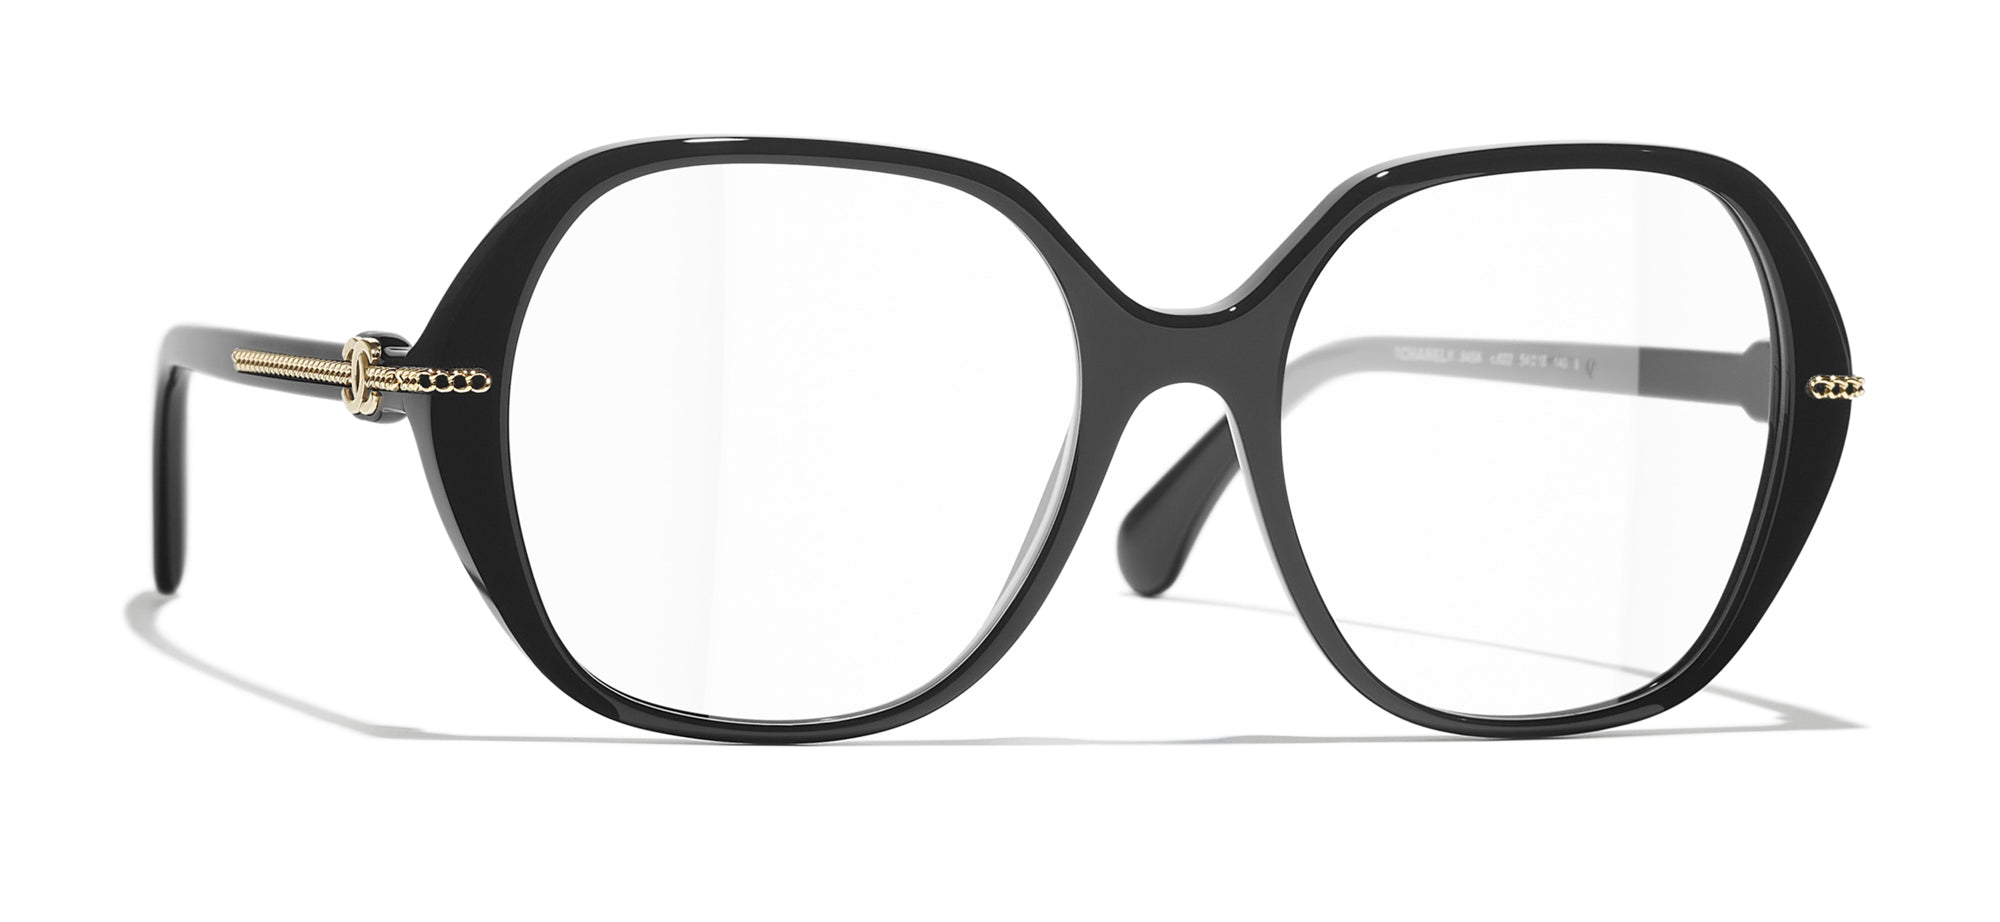 CHANEL 3458 Square Glasses | Fashion Eyewear US